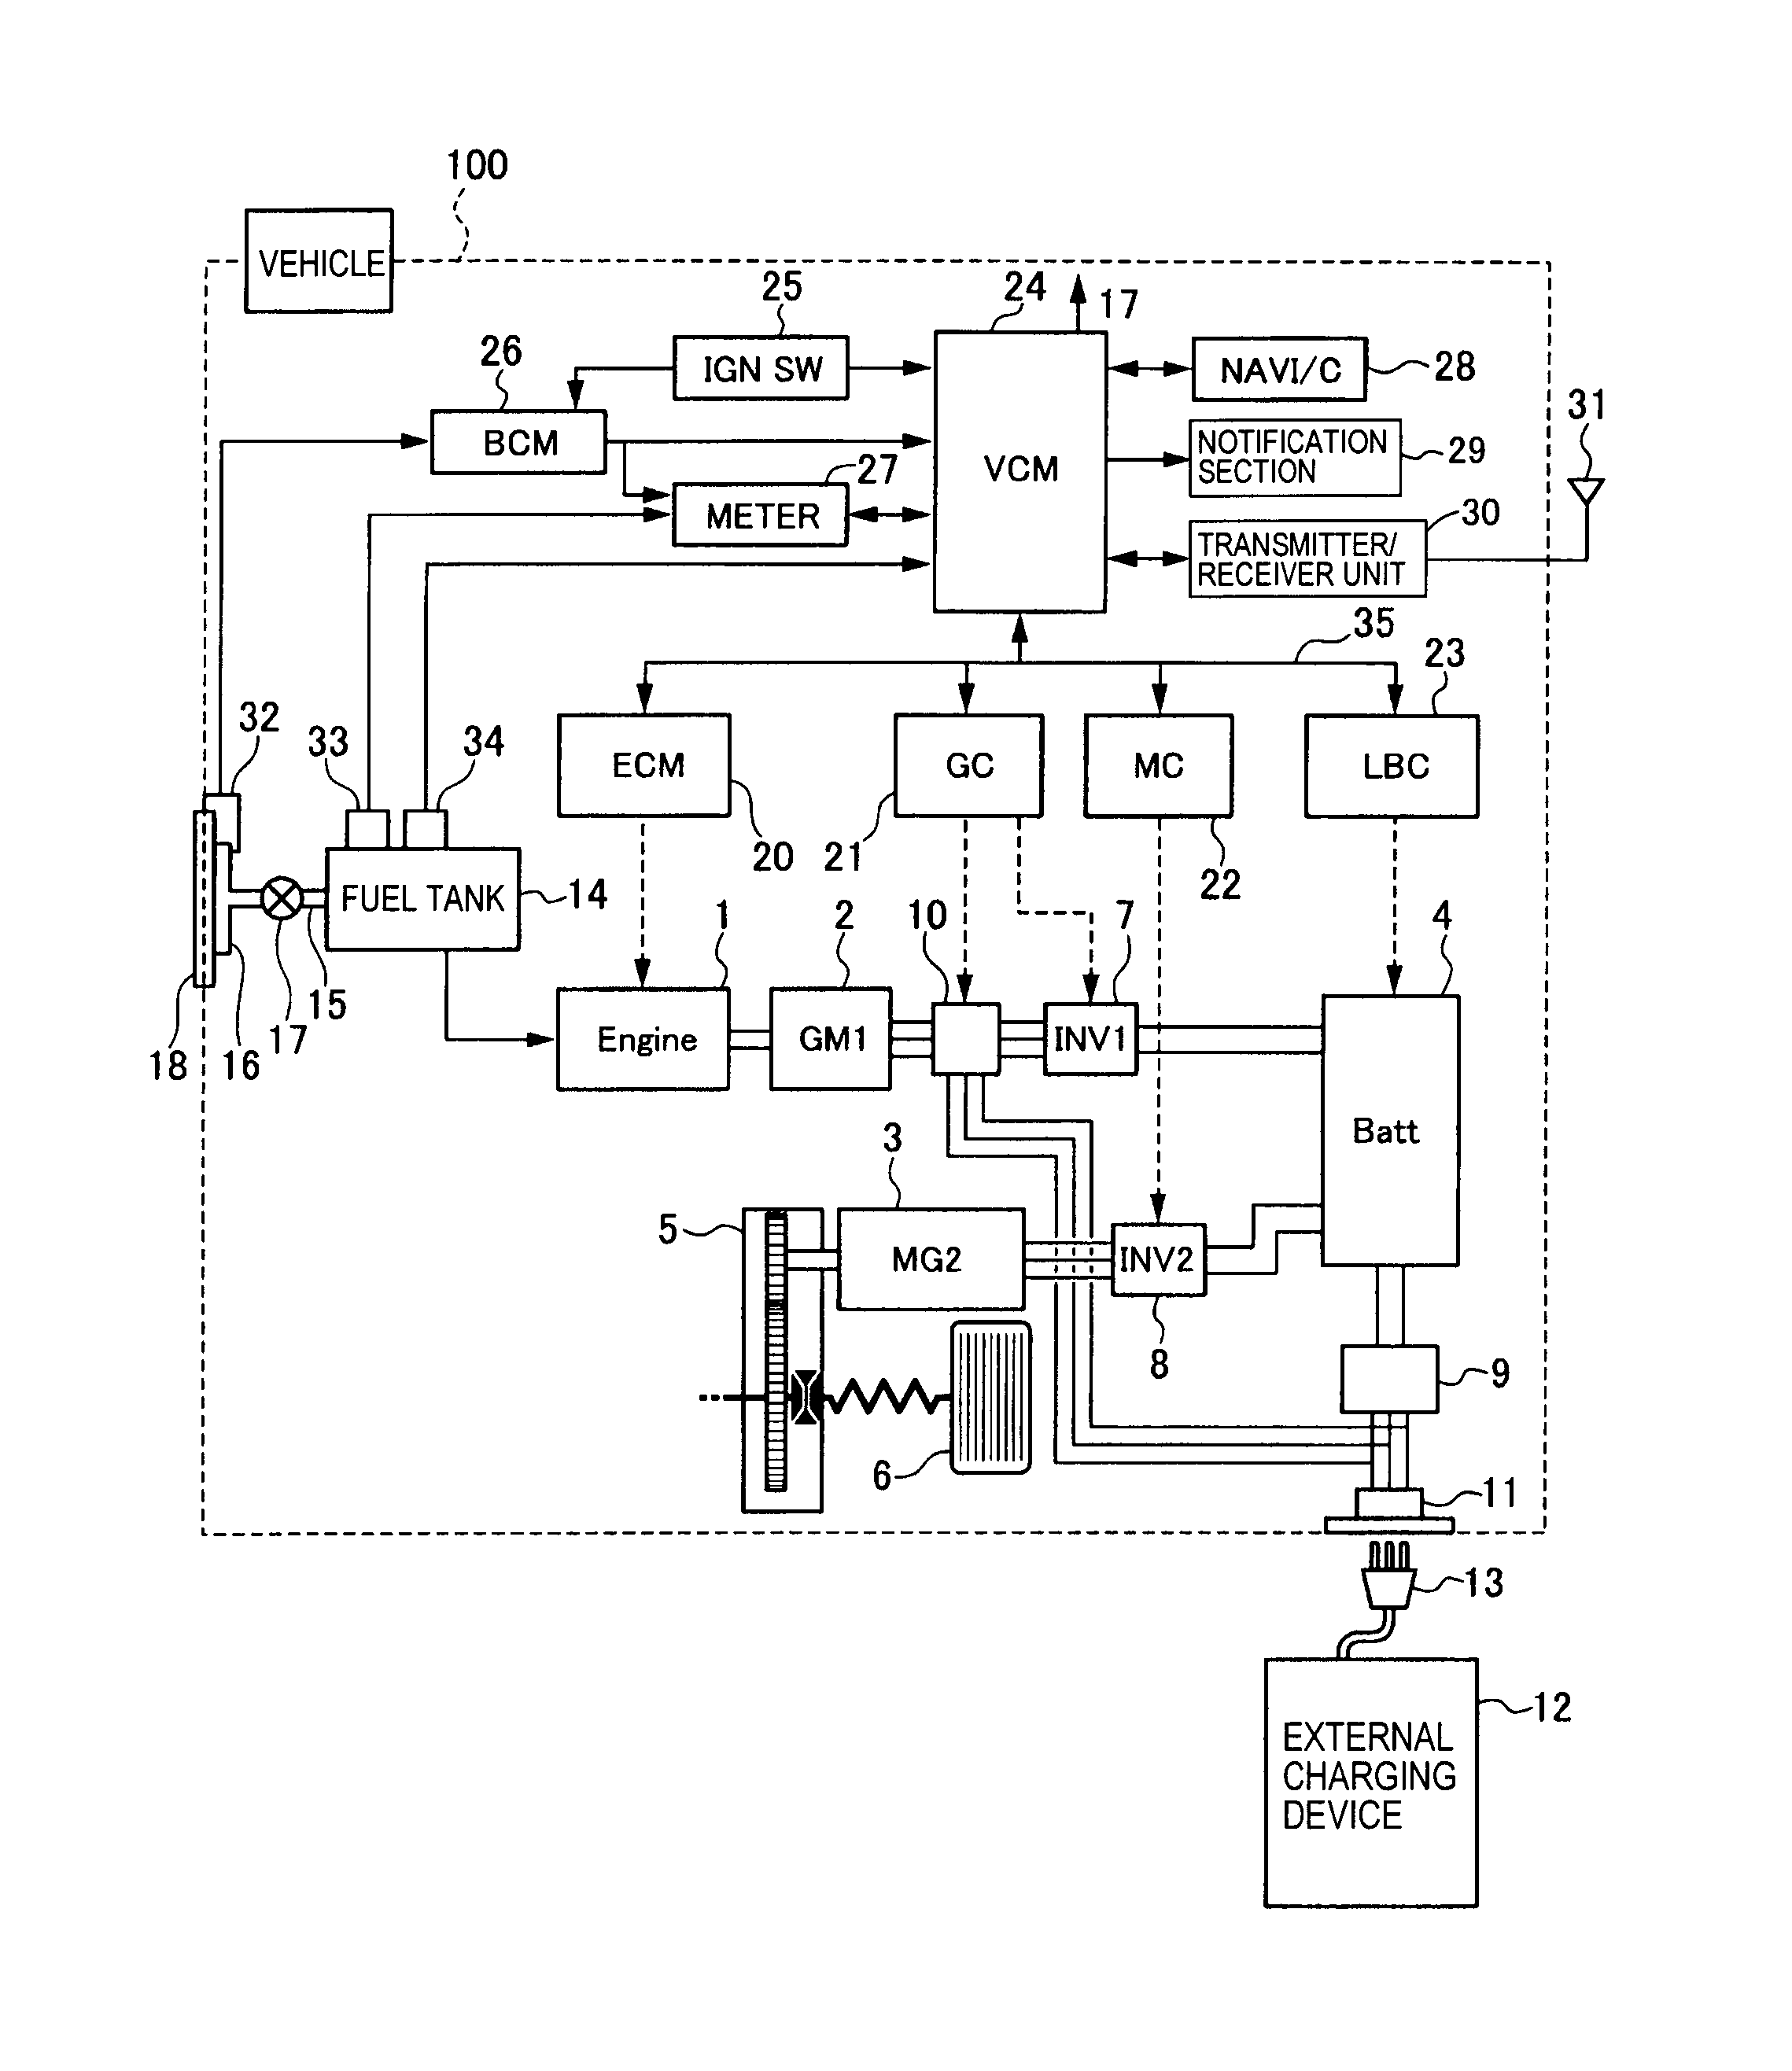 1756 ib16 wiring diagram